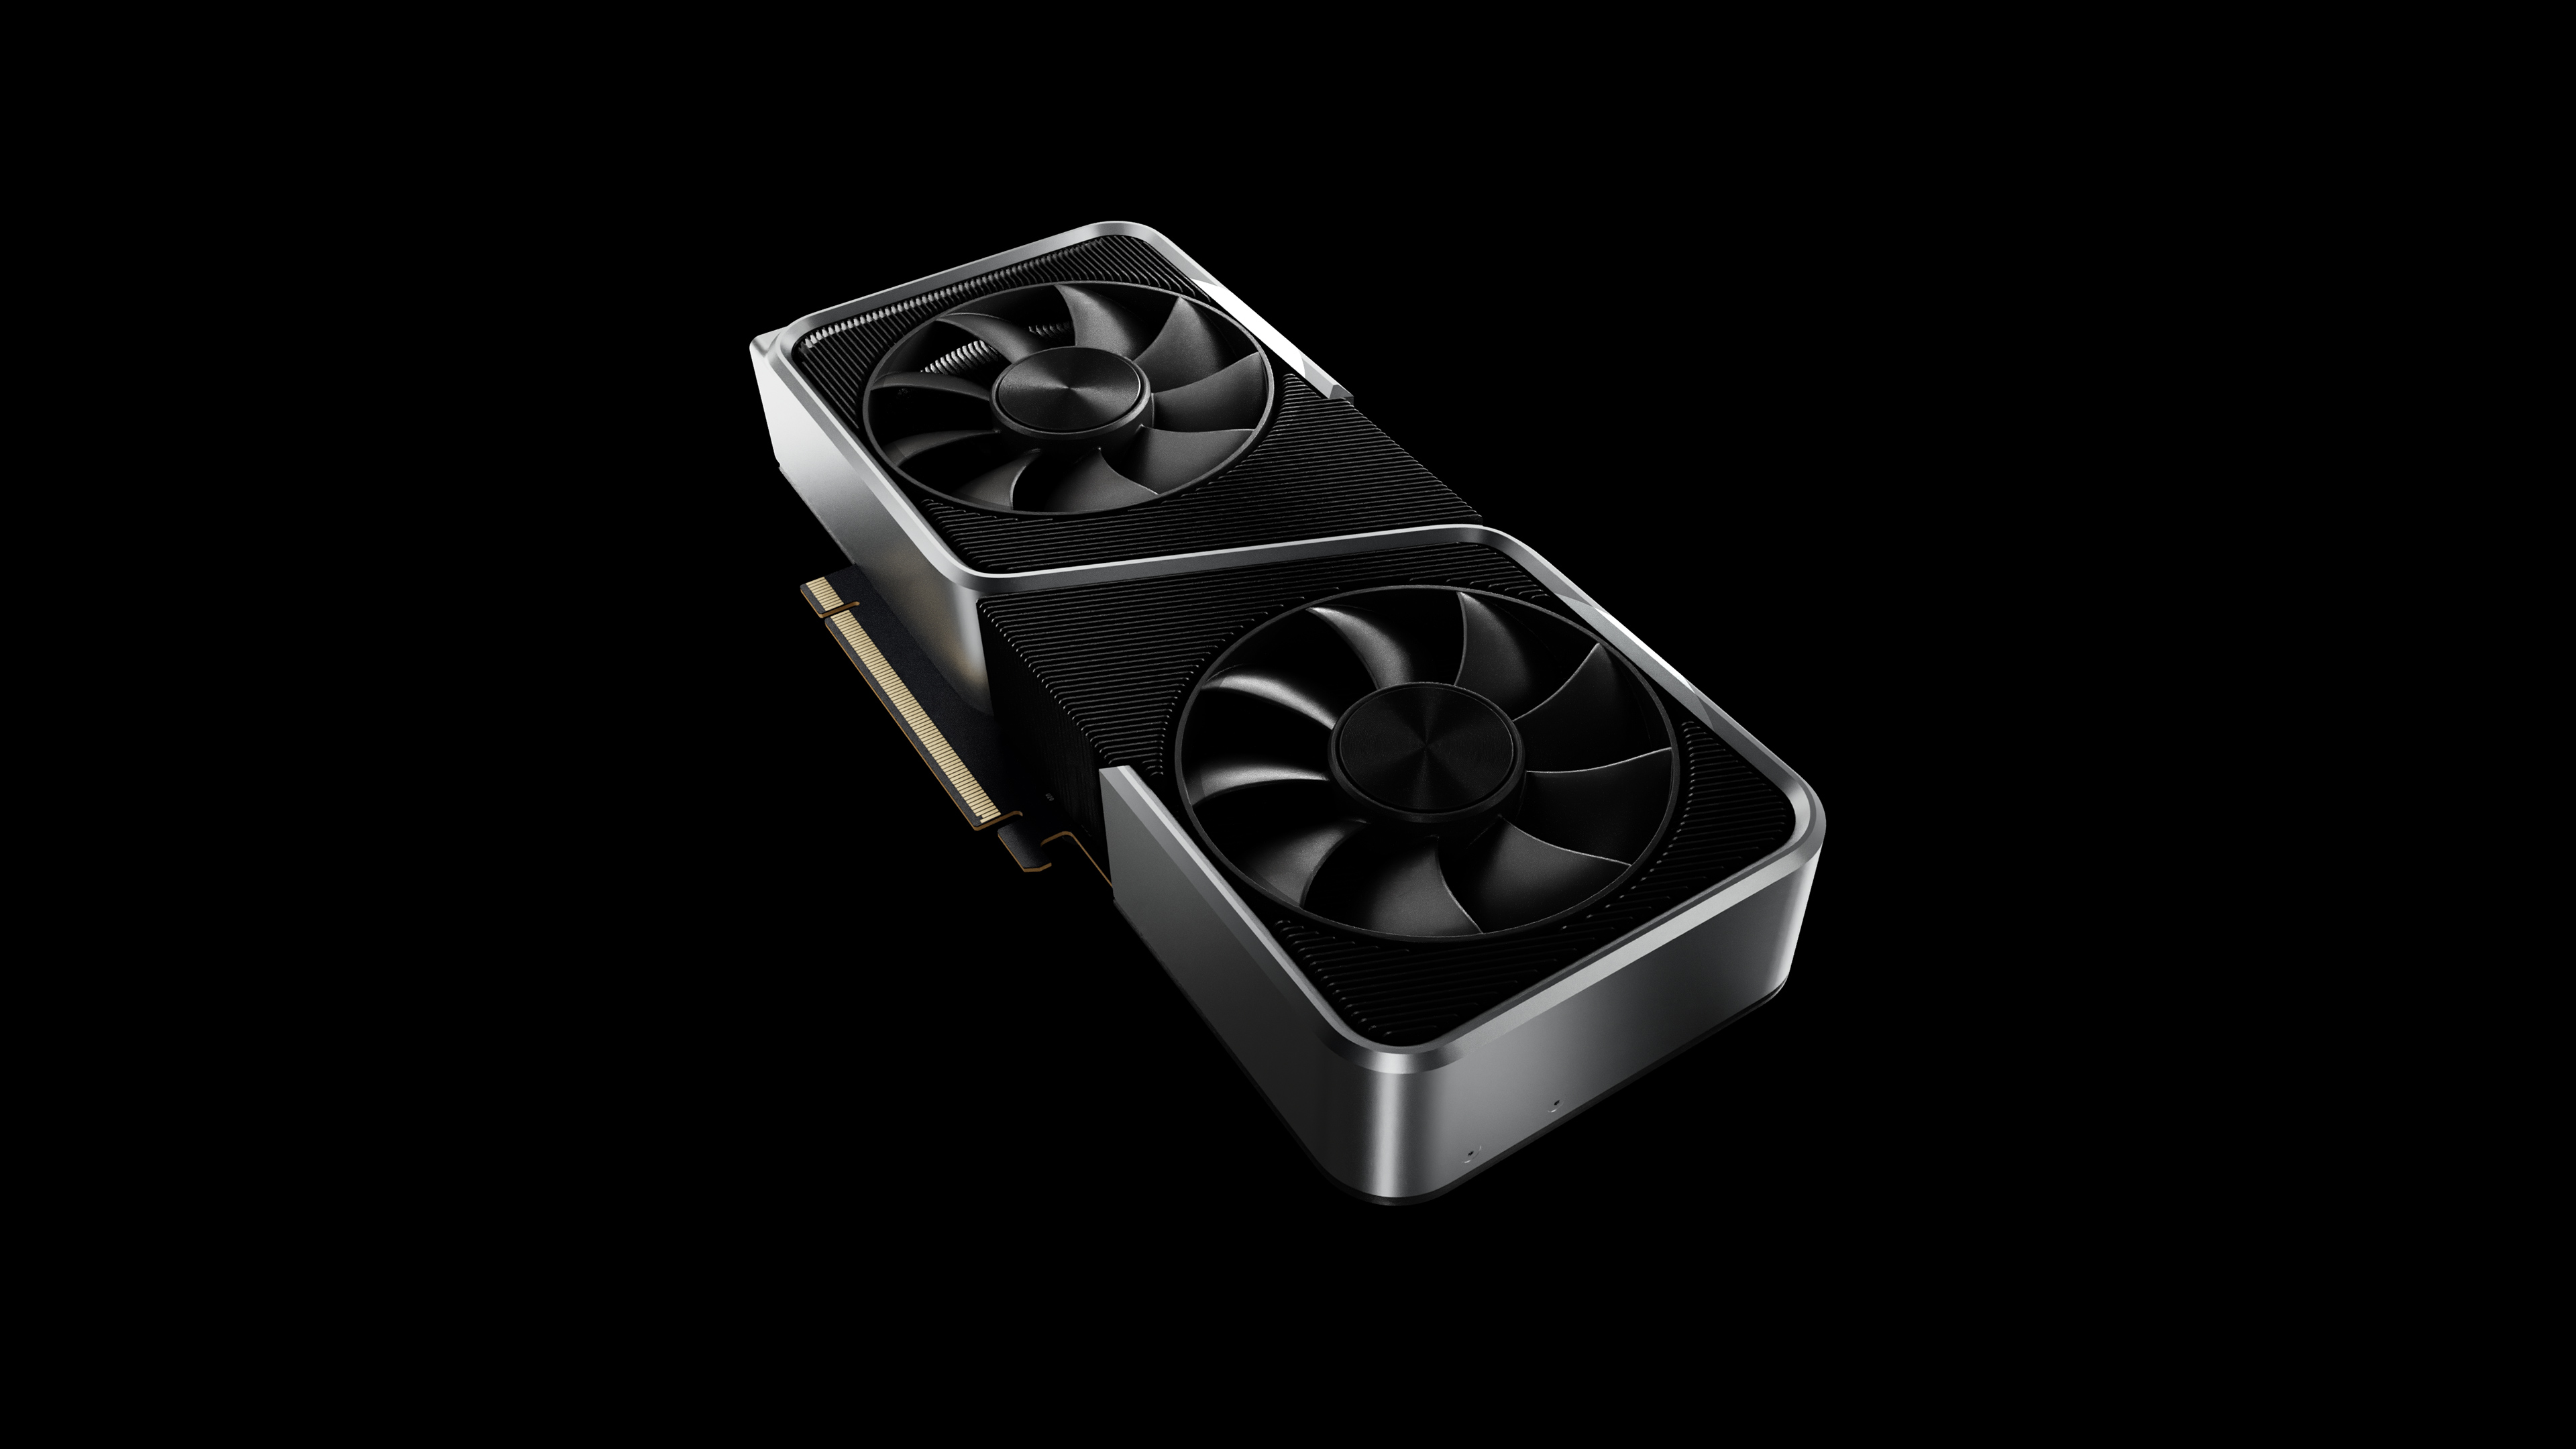 Nvidia GeForce RTX 3060 Ti on a black background